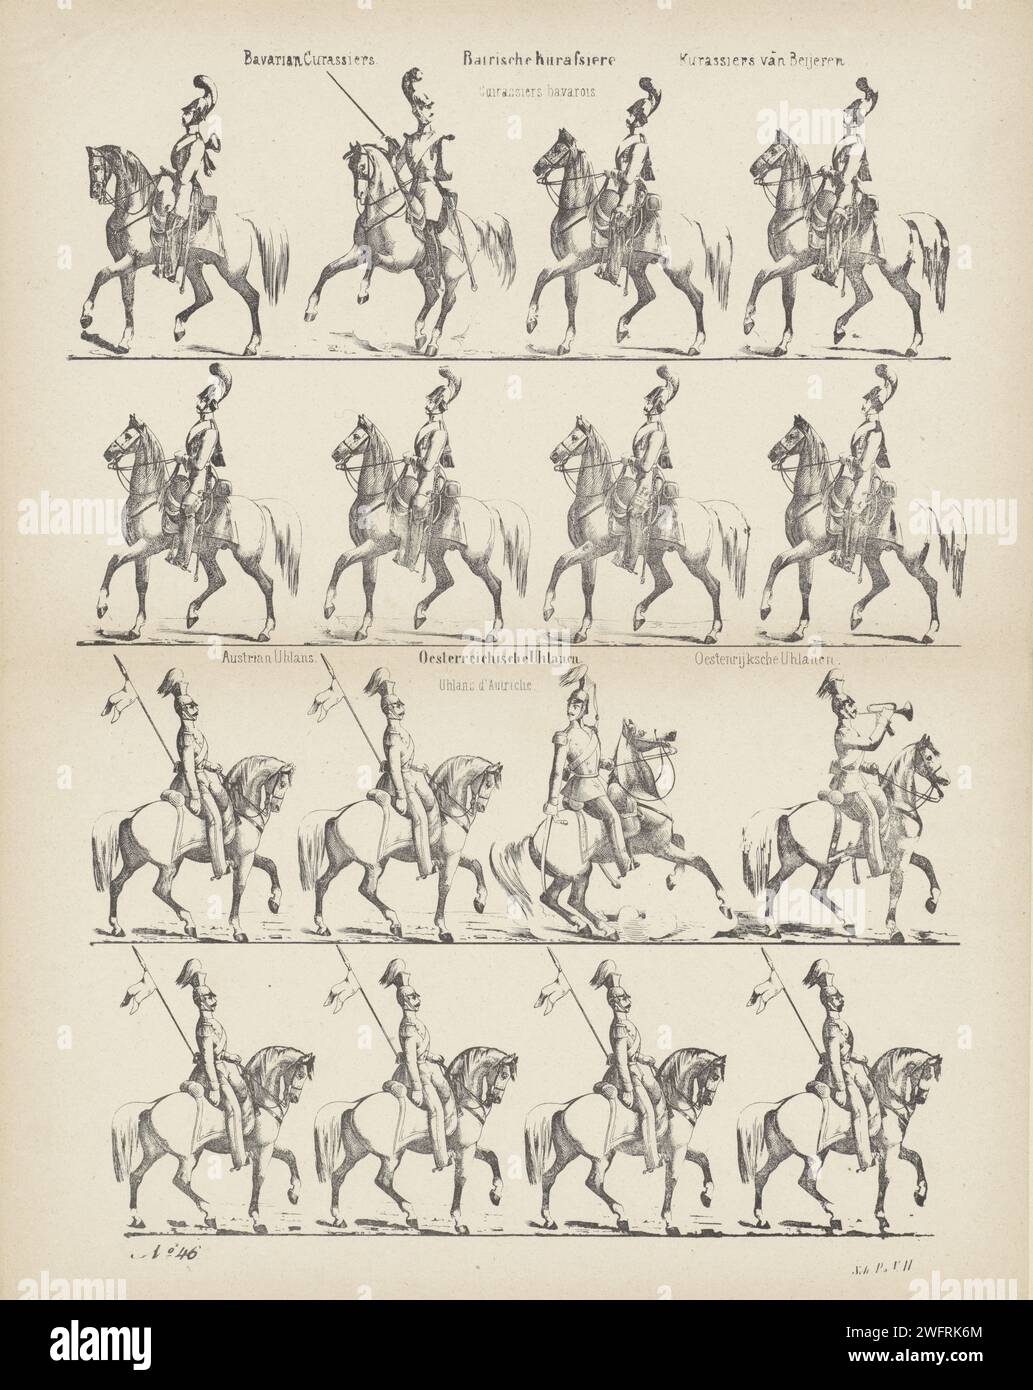 Bavarian Curassiers / Batrian Kurassiere / Kurassiers van Beijeren / Curassiers Bavarois / Austrian Uhlans / Oesterreichische Uhlanen / Oestenrijk Uhlanen / Uhlans d'Autriche, P. & V.H. Sch., 1800 - 1899 print Leaf with 4 horizontal rows with representations of soldiers on horseback. Above: Eight Kurassiers from Bavaria. Below: Eight Austrian Ulans. Numbered bottom left: No. 46. Europe paper  warfare; military affairs (+ cavalry, horsemen) Stock Photo